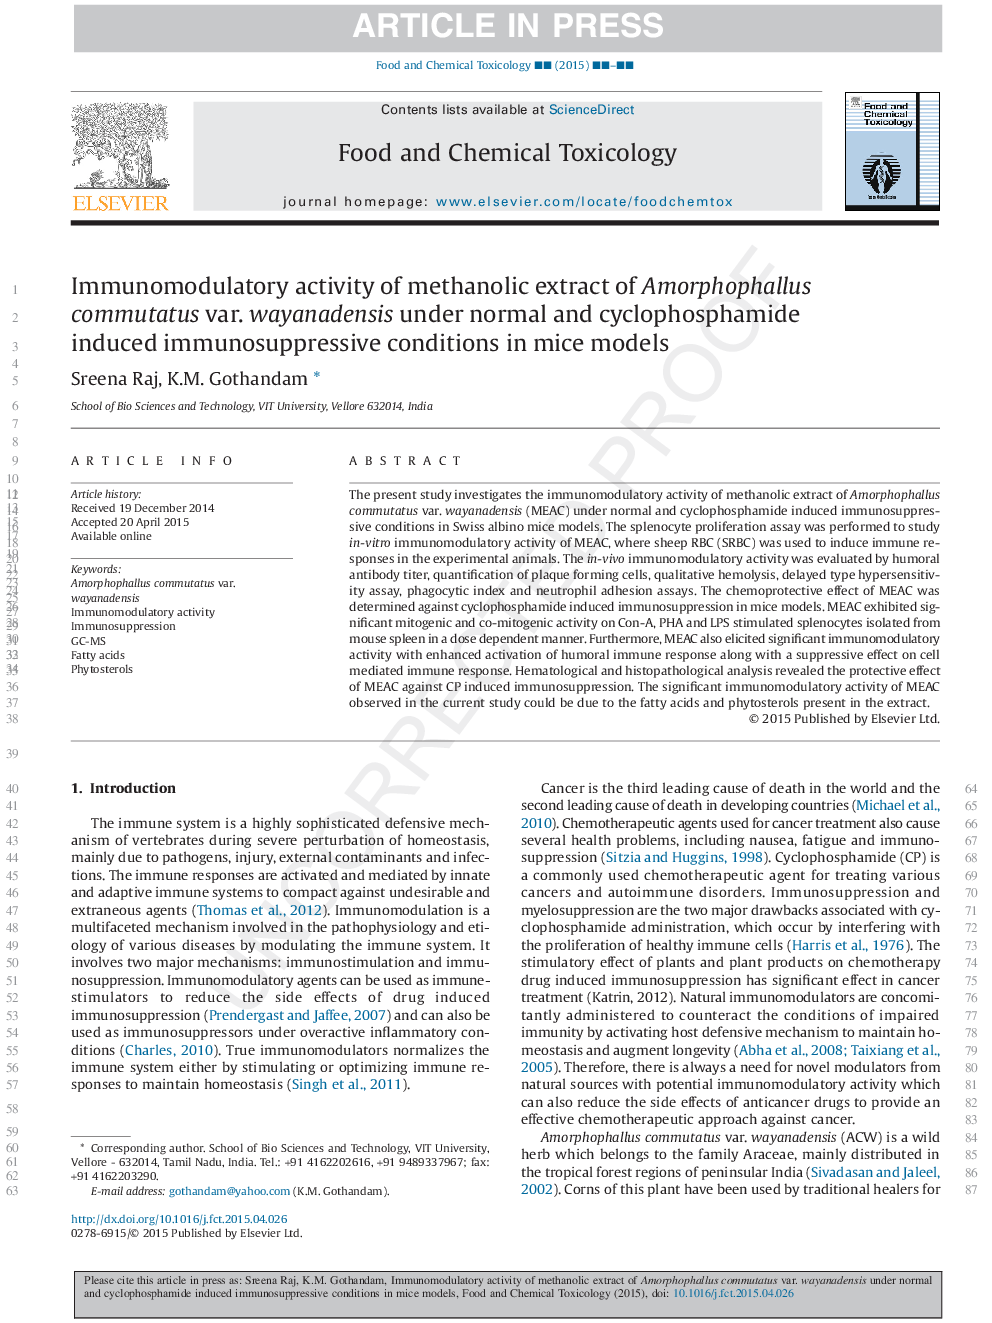 Immunomodulatory activity of methanolic extract of Amorphophallus commutatus var. wayanadensis under normal and cyclophosphamide induced immunosuppressive conditions in mice models